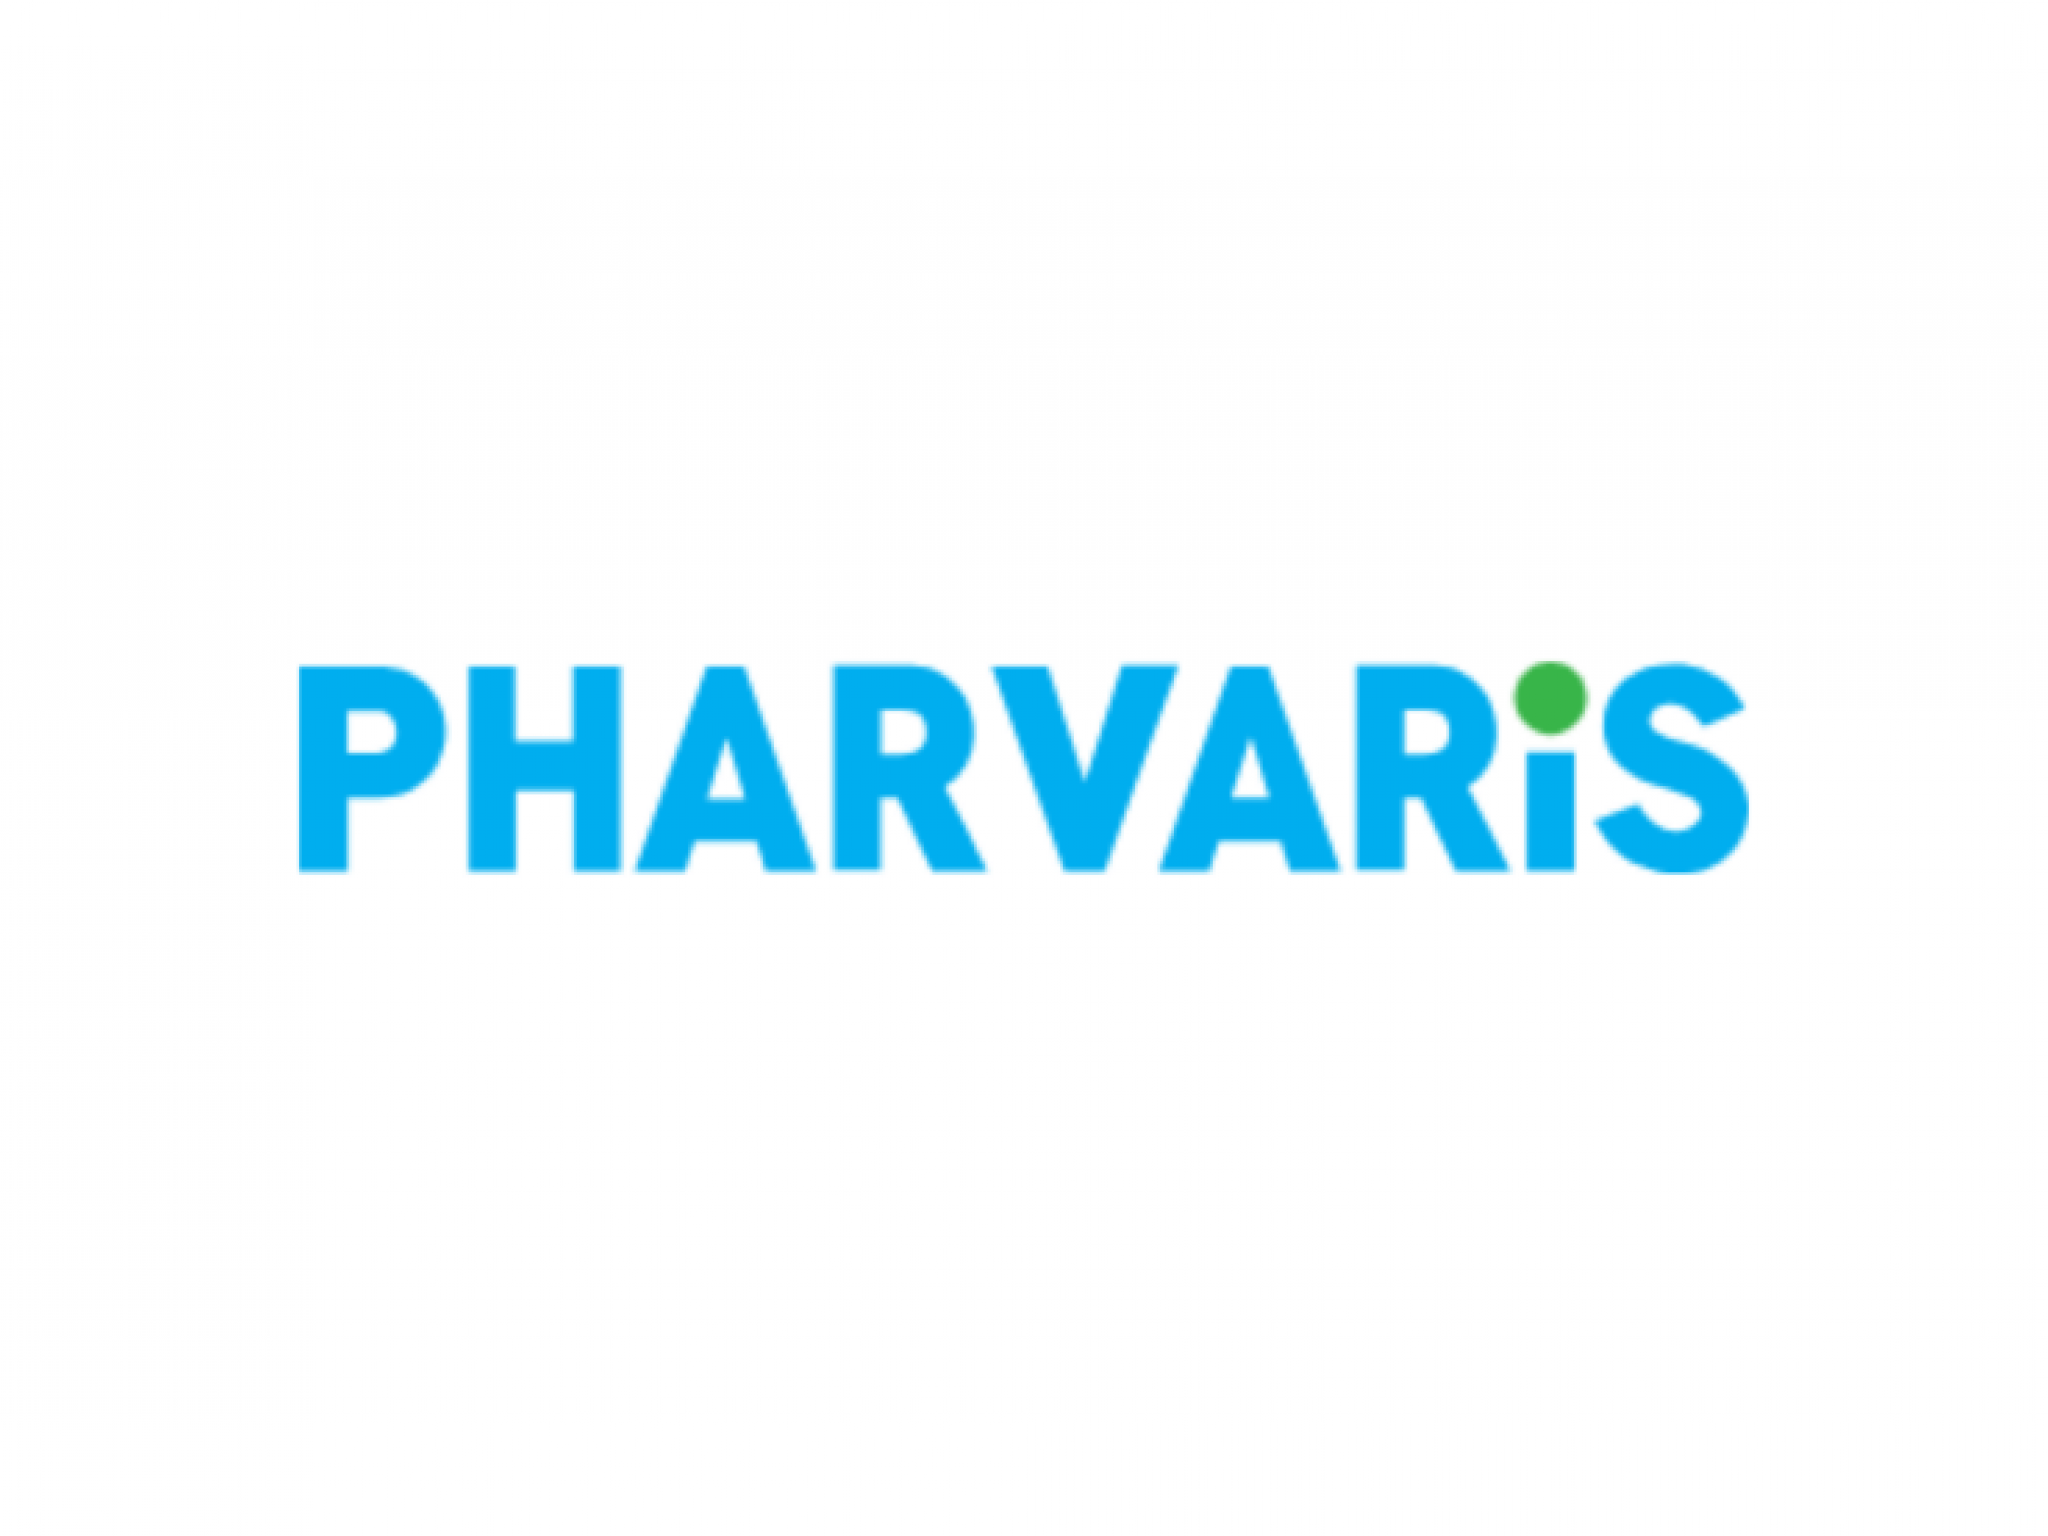  fda-clears-pharvaris-trial-for-investigational-drug-for-swollen-blood-vessels-stock-jumps 